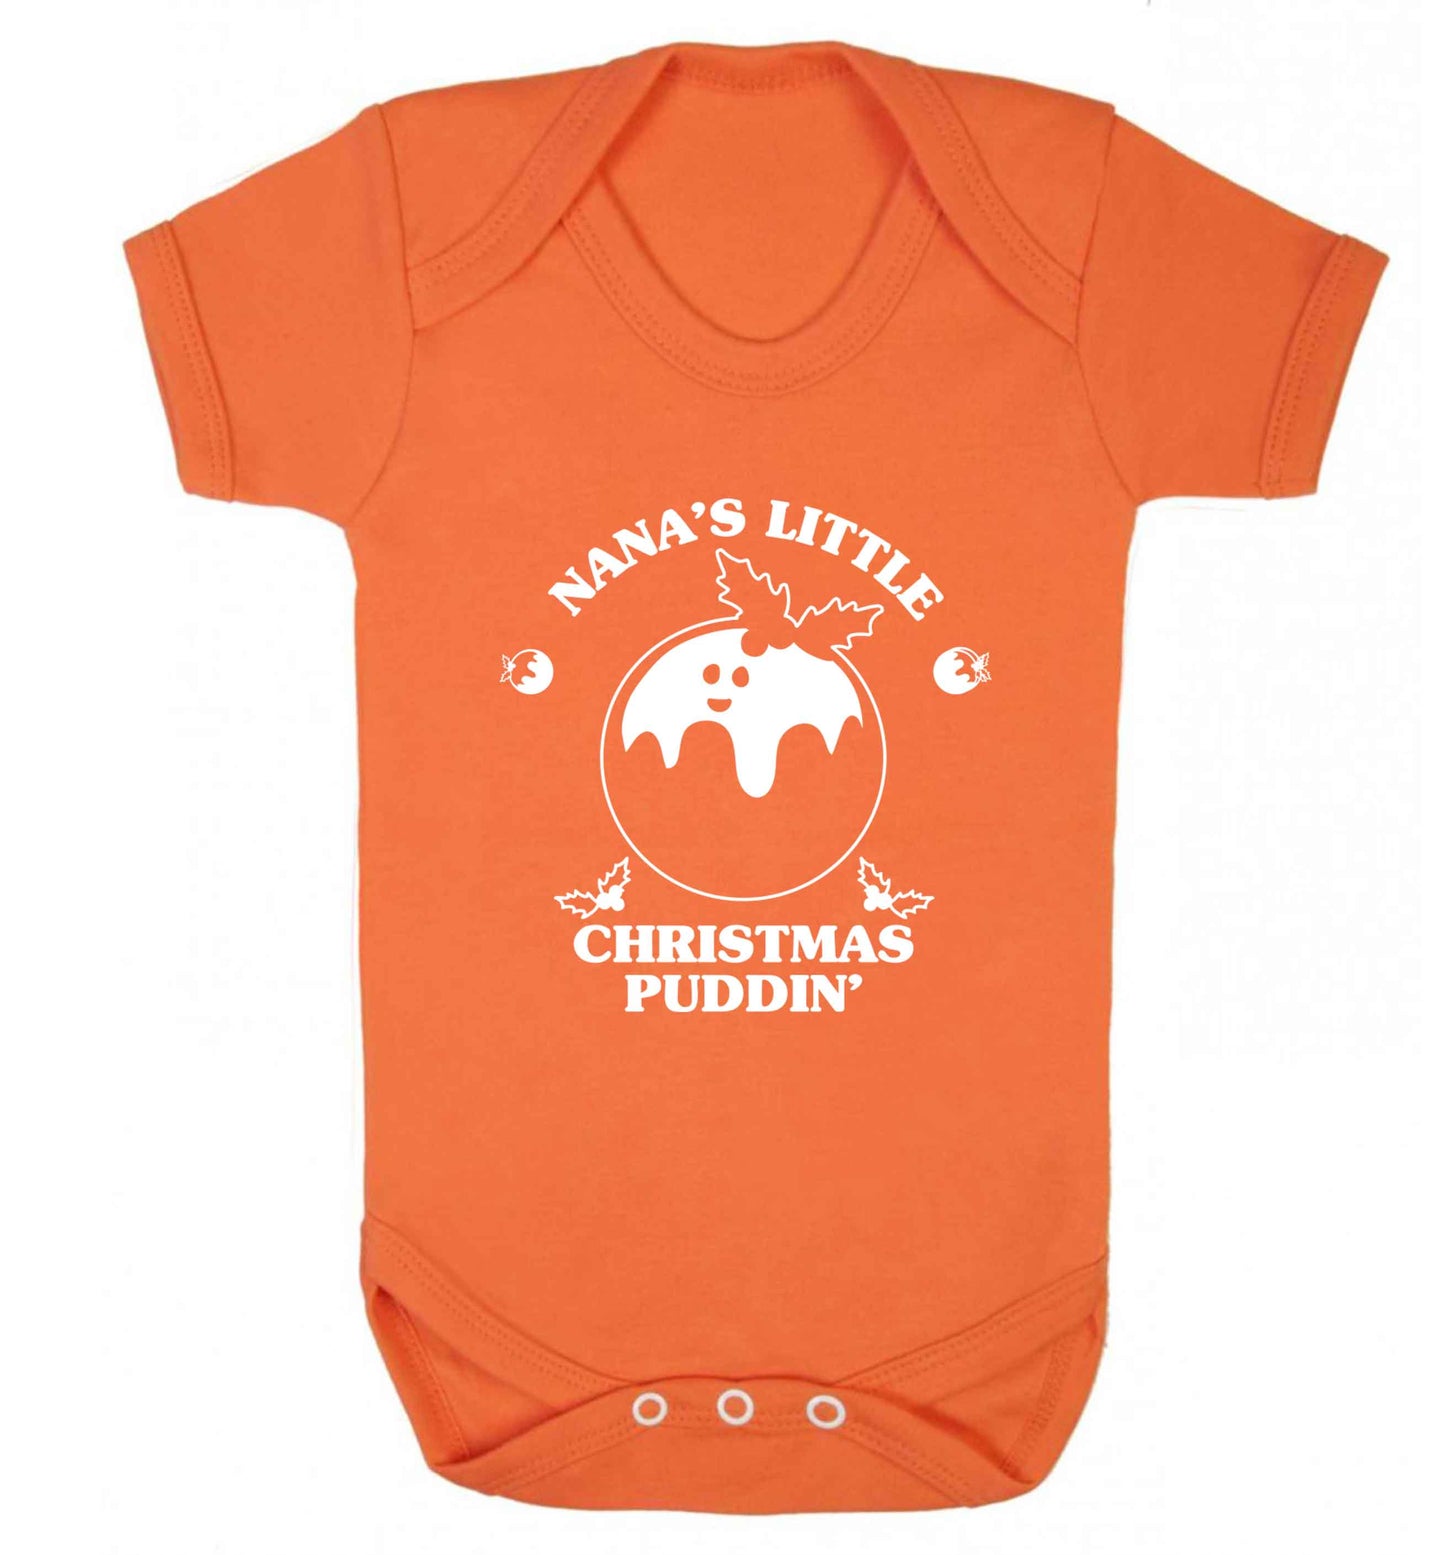 Nana's little Christmas puddin' Baby Vest orange 18-24 months